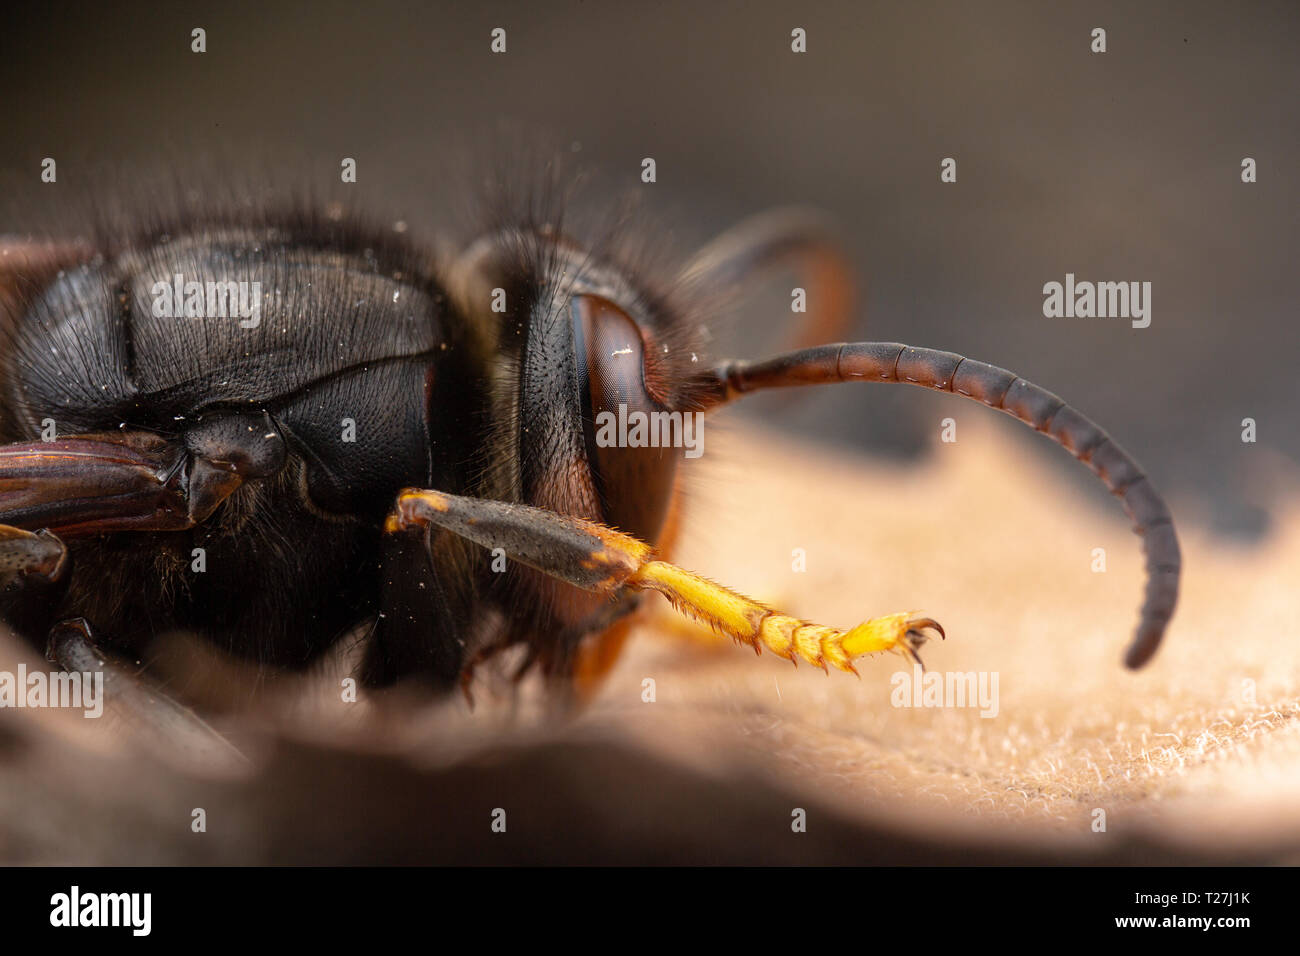 Real Asian wasp, also called Vespa velutina macro photography Stock Photo